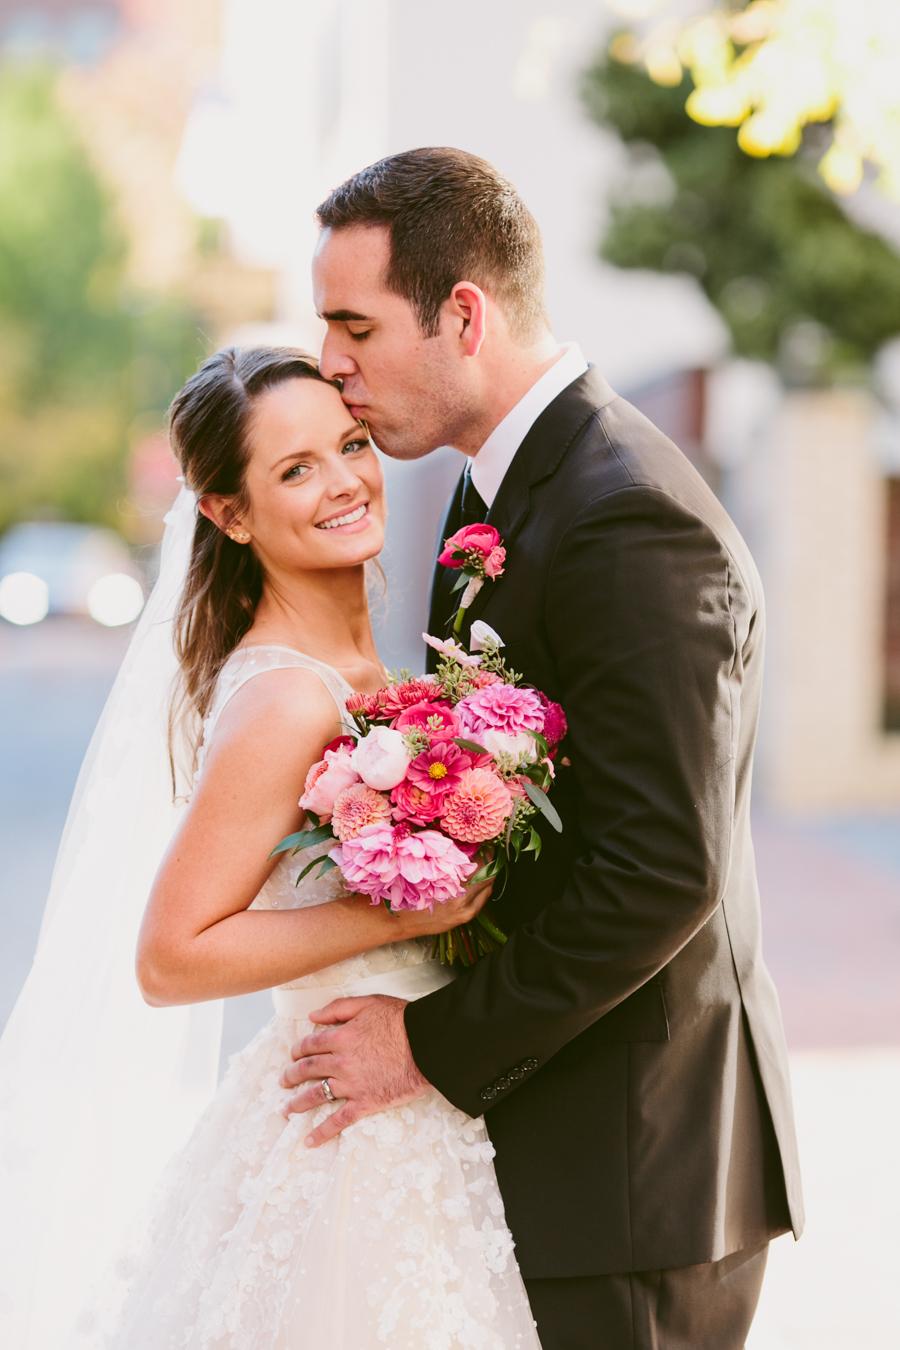 10 Wedding Planning Tips From Real Philadelphia Brides Philly In Love Philadelphia Weddings Venues Vendors